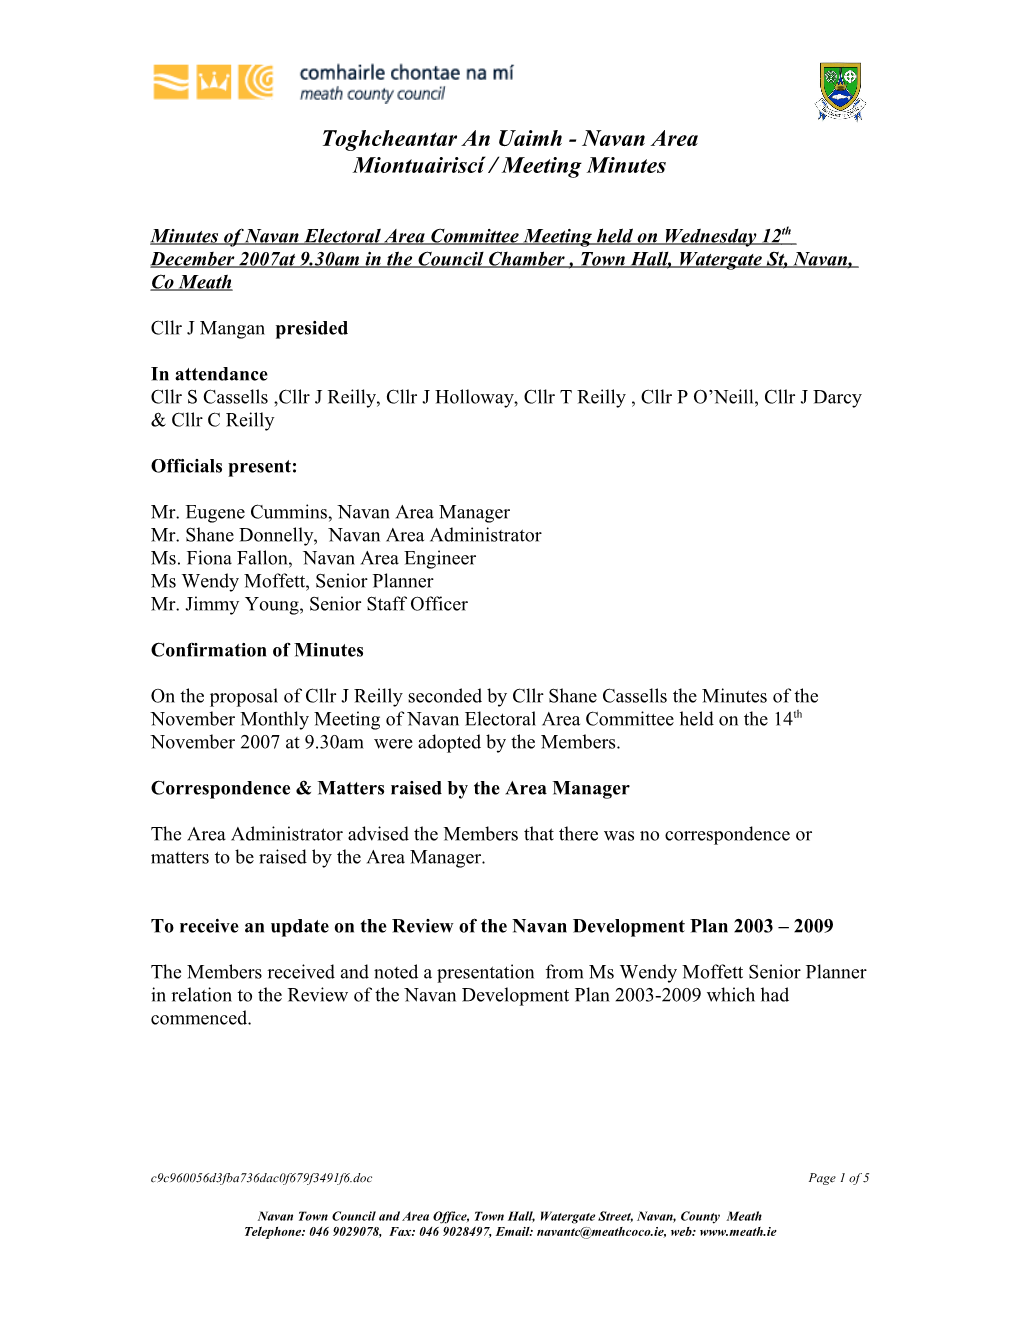 Minutes of Navan Electoral Area Committee Meeting Held on Wednesday 12Th December 2007At 9